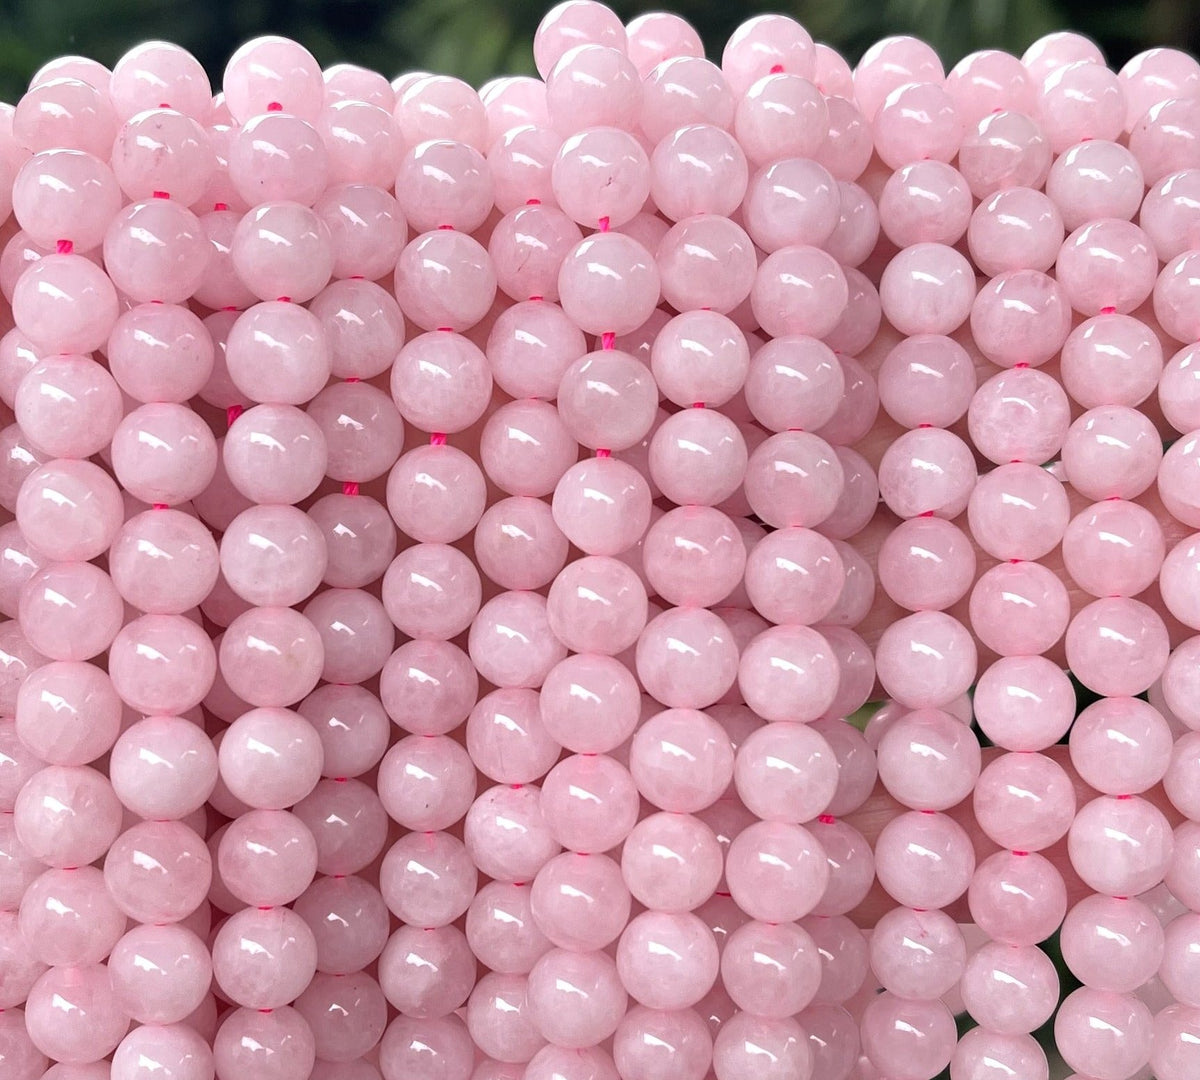 Rose Quartz 8mm round natural gemstone beads 15.5" strand - Oz Beads 